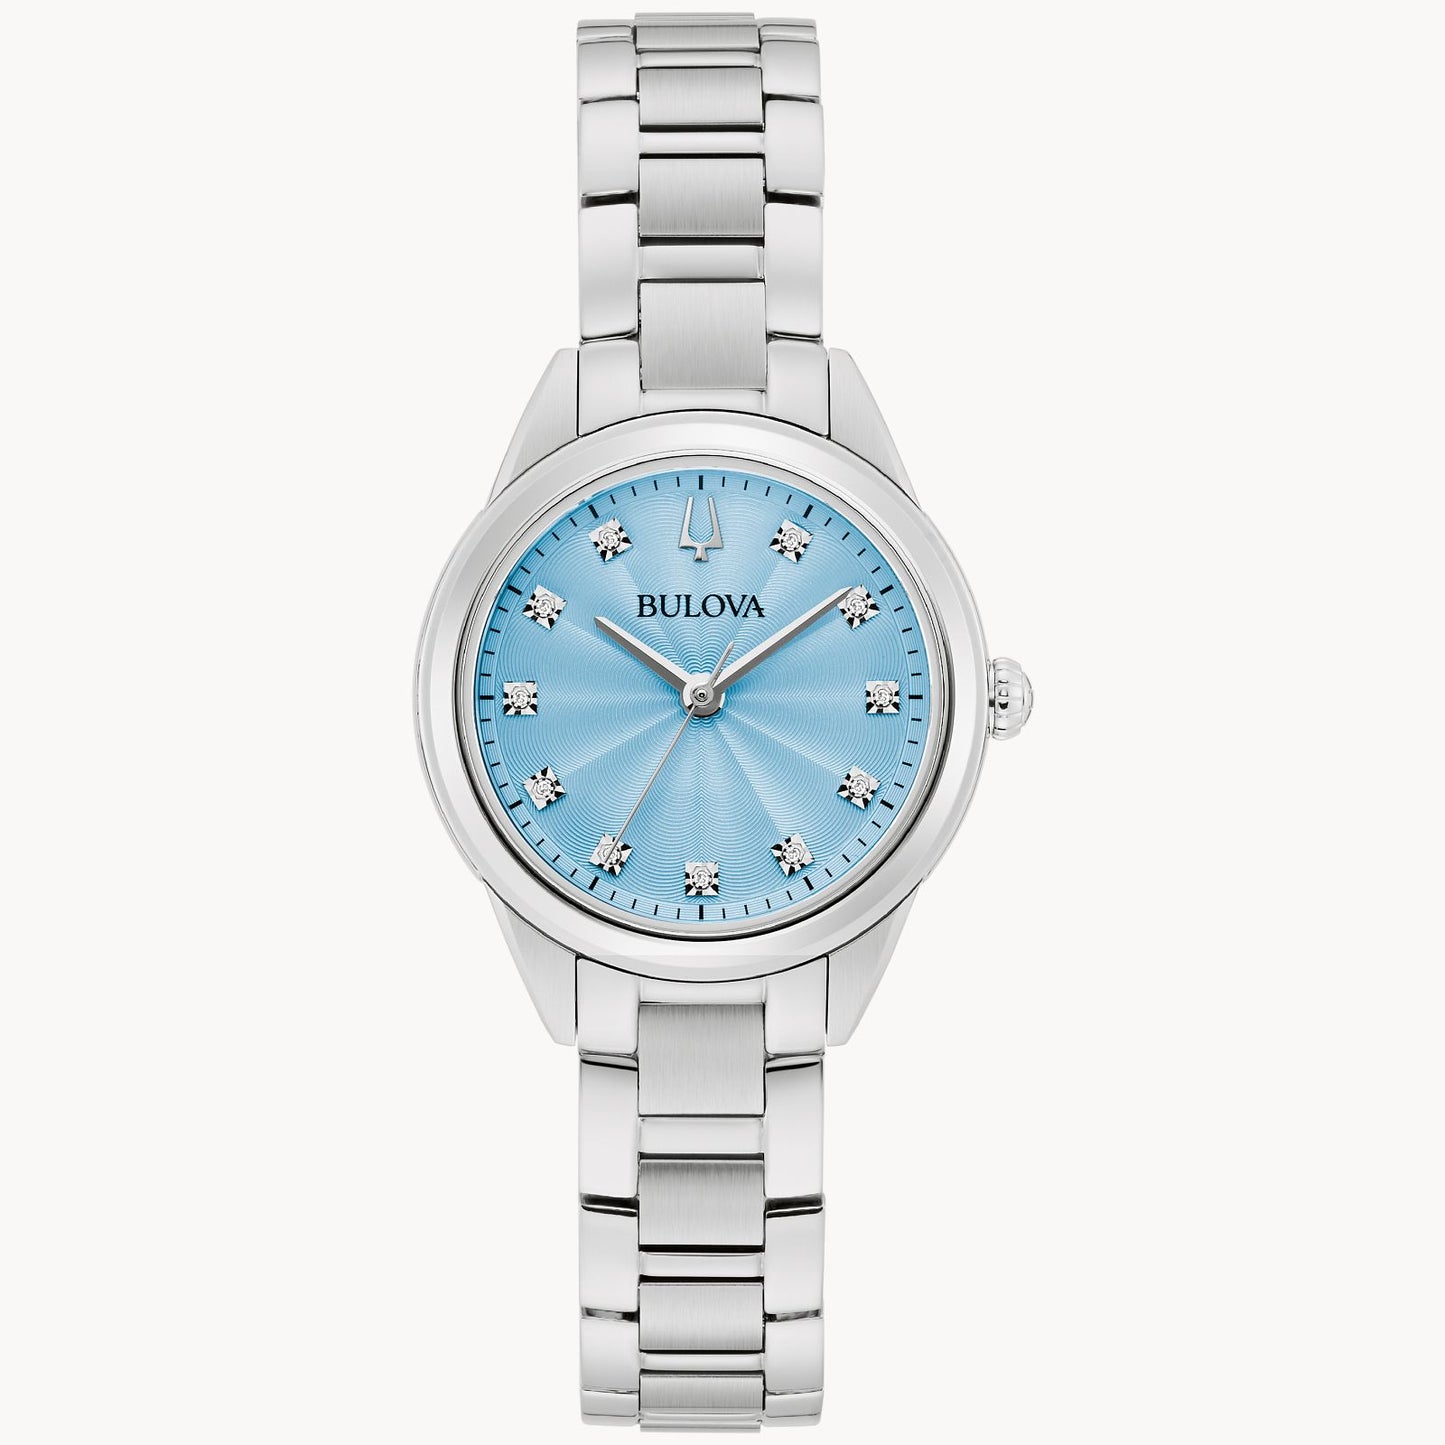 Bulova Women's Stainless Steel Bracelet Watch with Striking Blue Dial